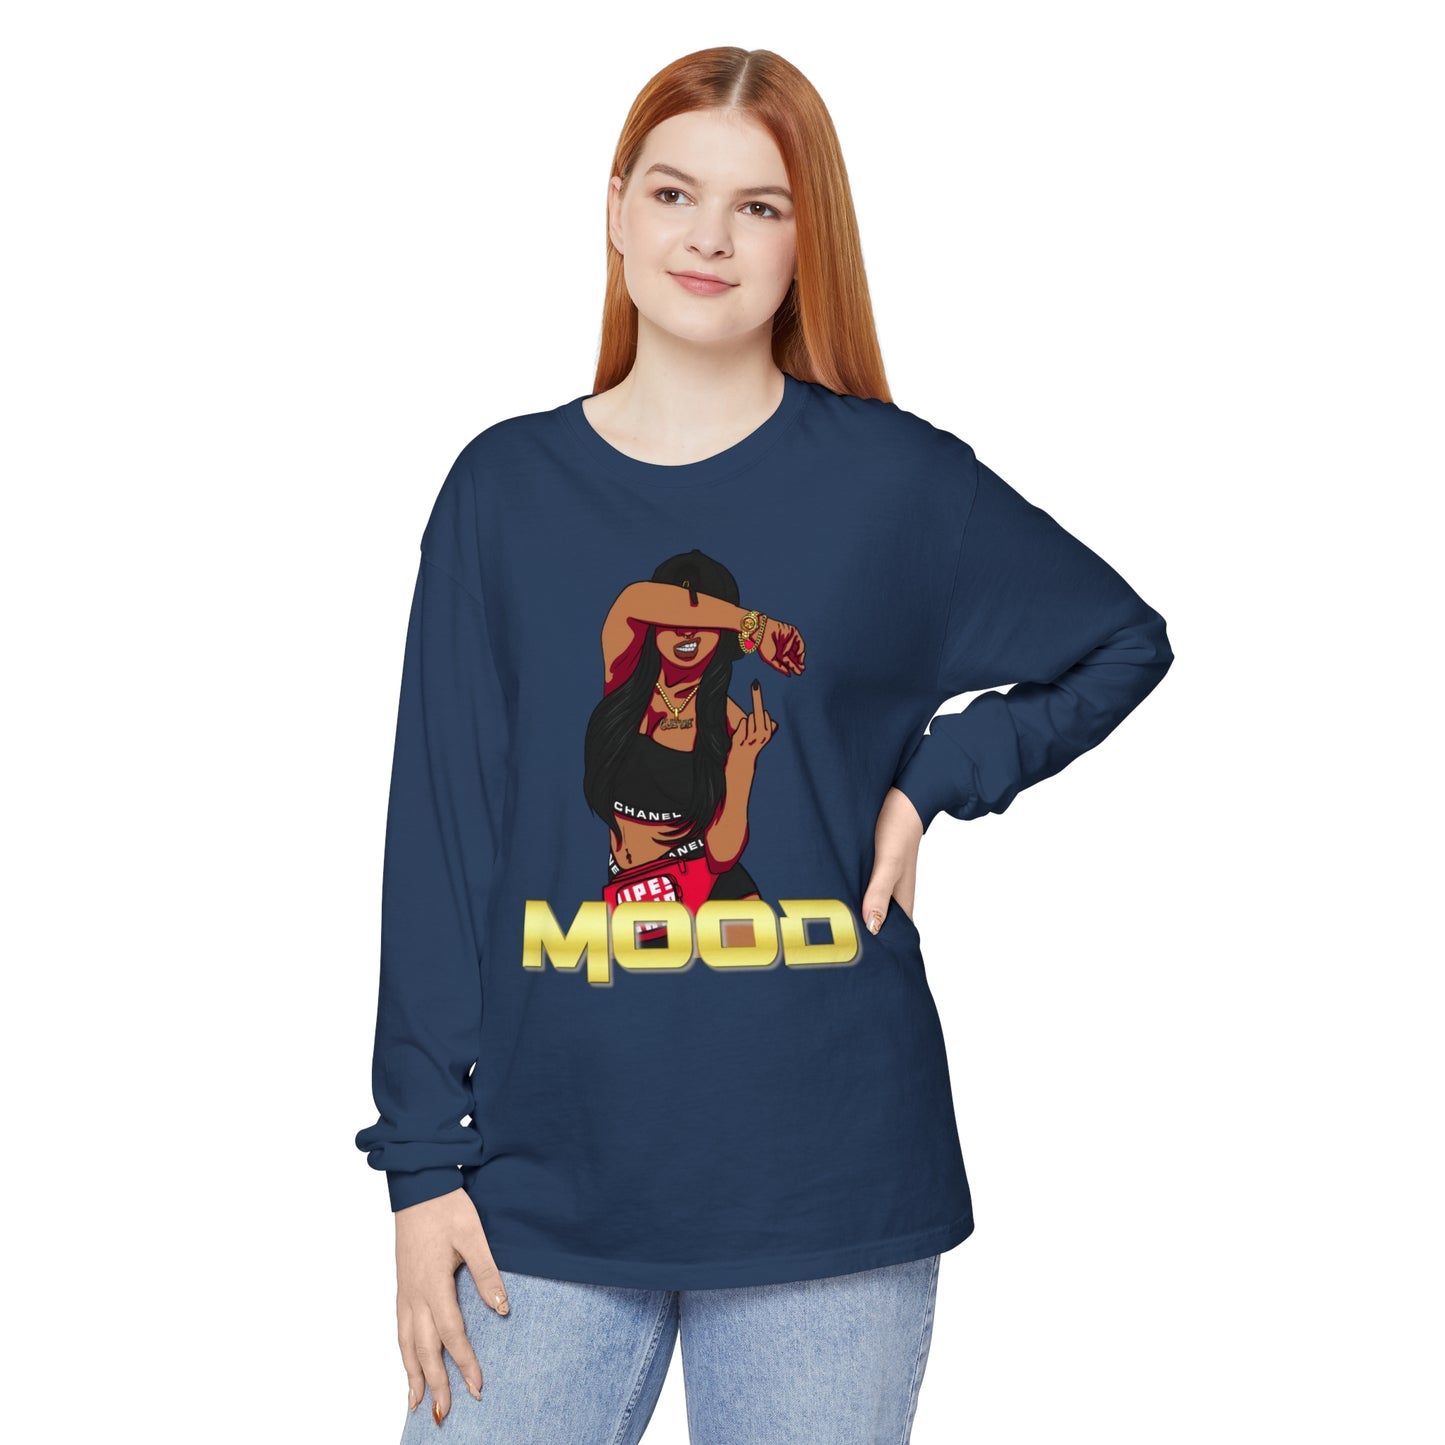 Bad Mood - Long Sleeve T-Shirt